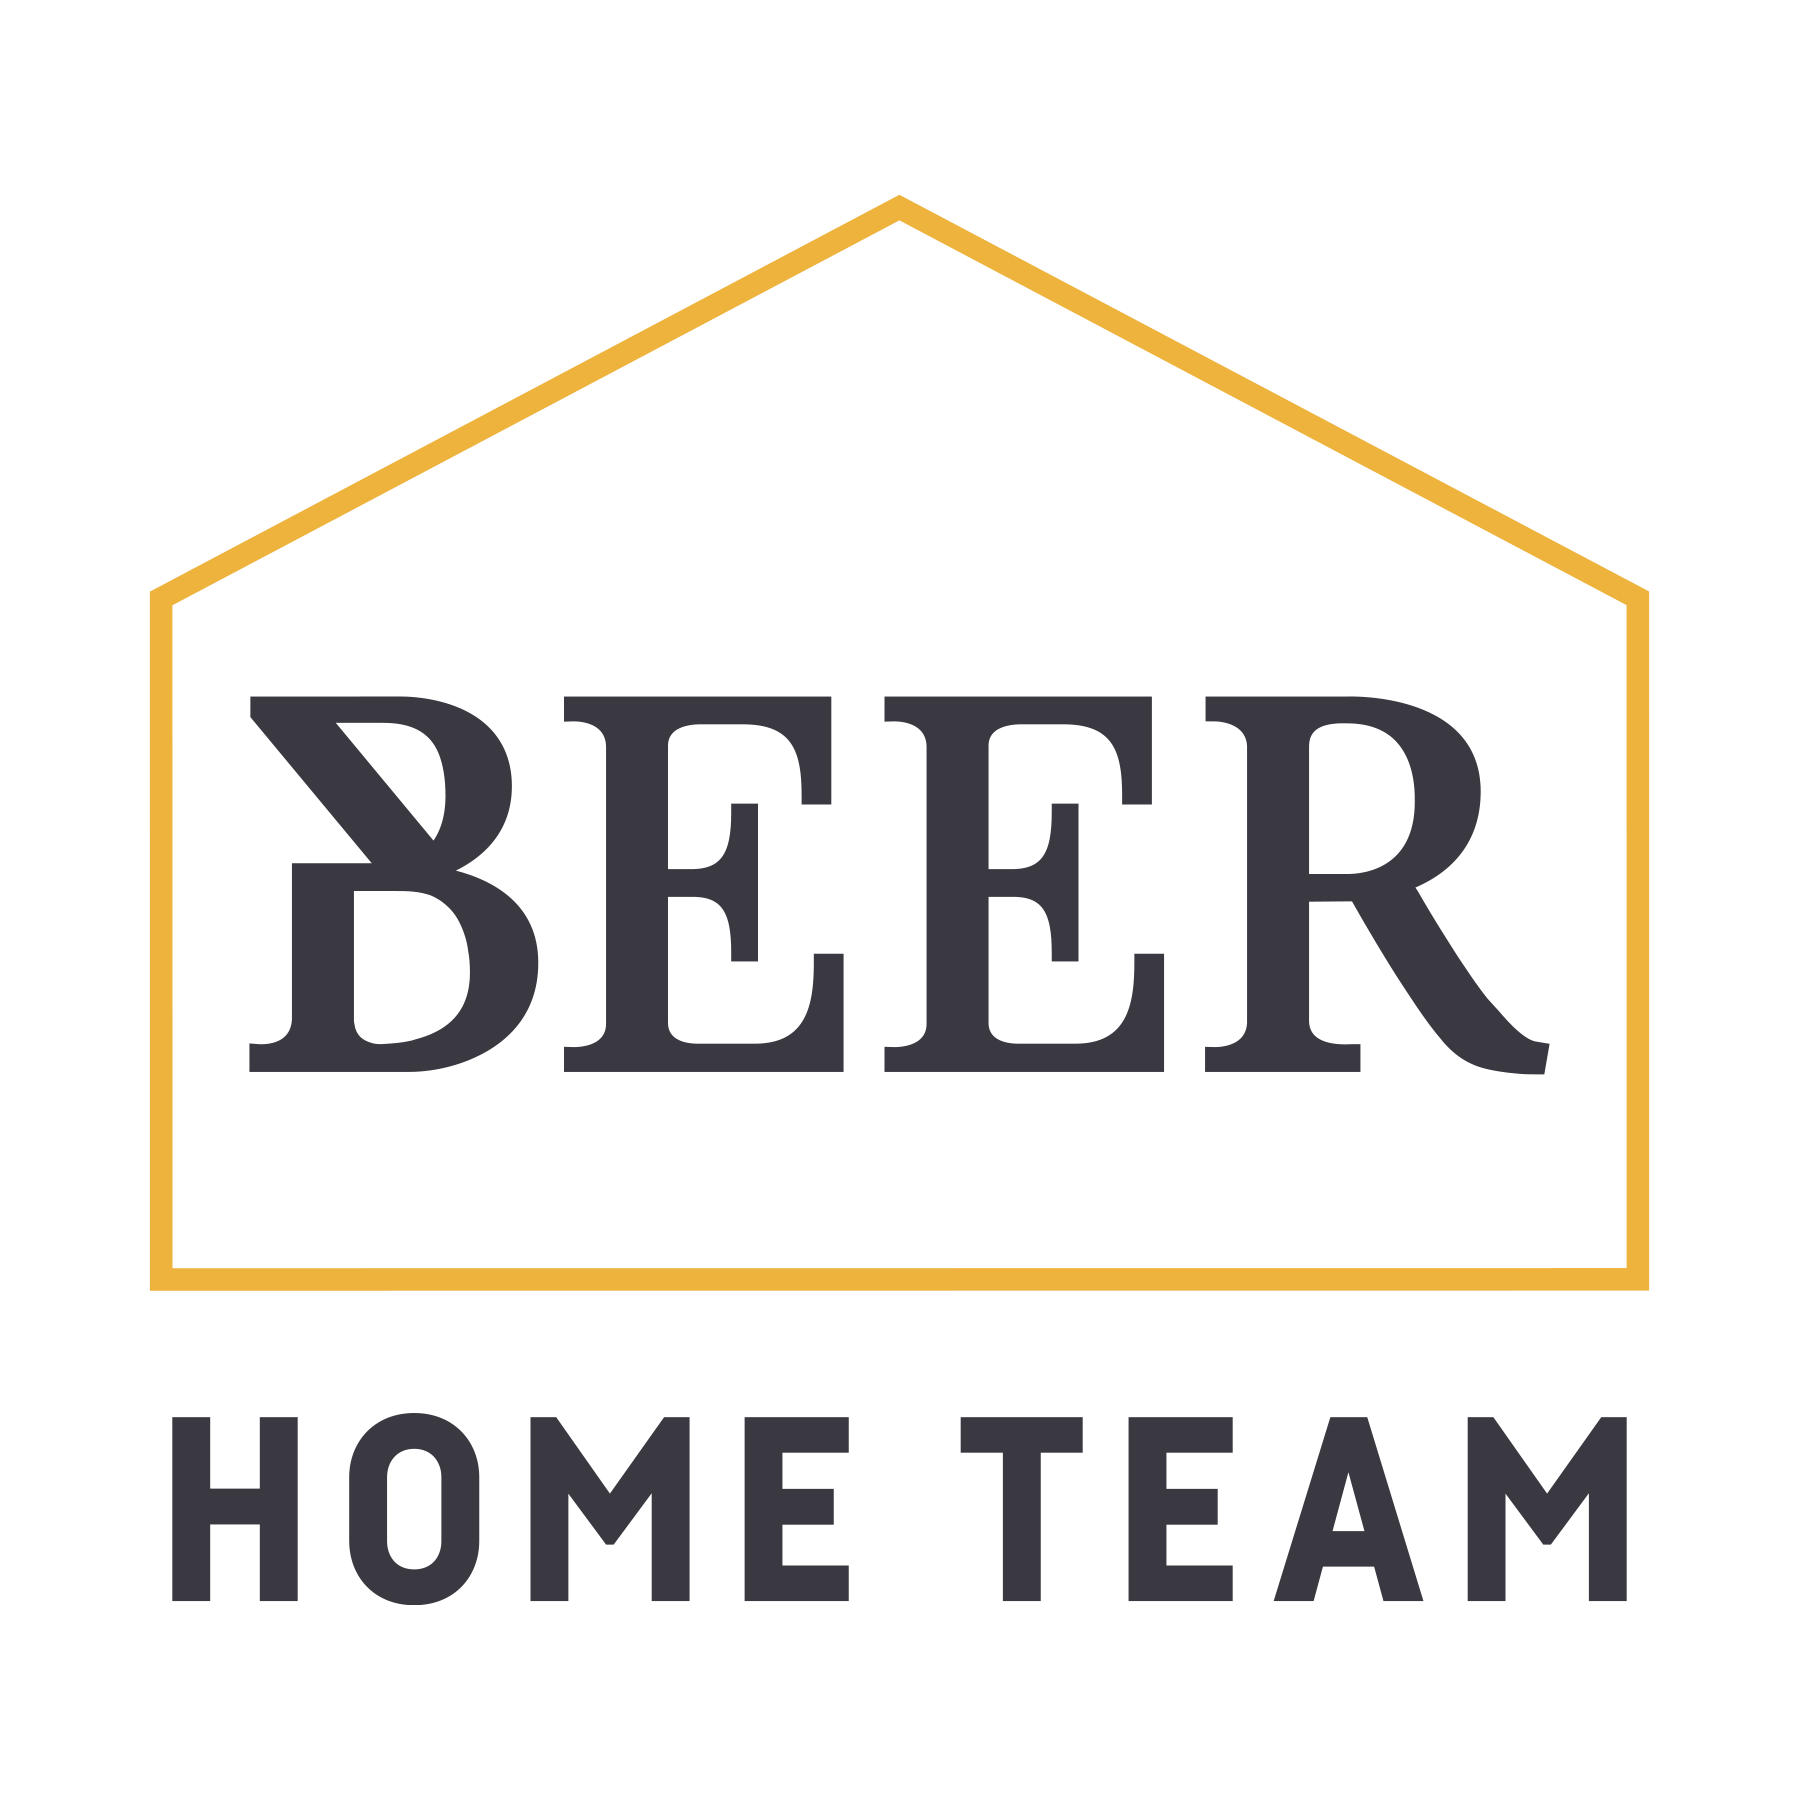 Beer Home Team LOGO - PNG.png